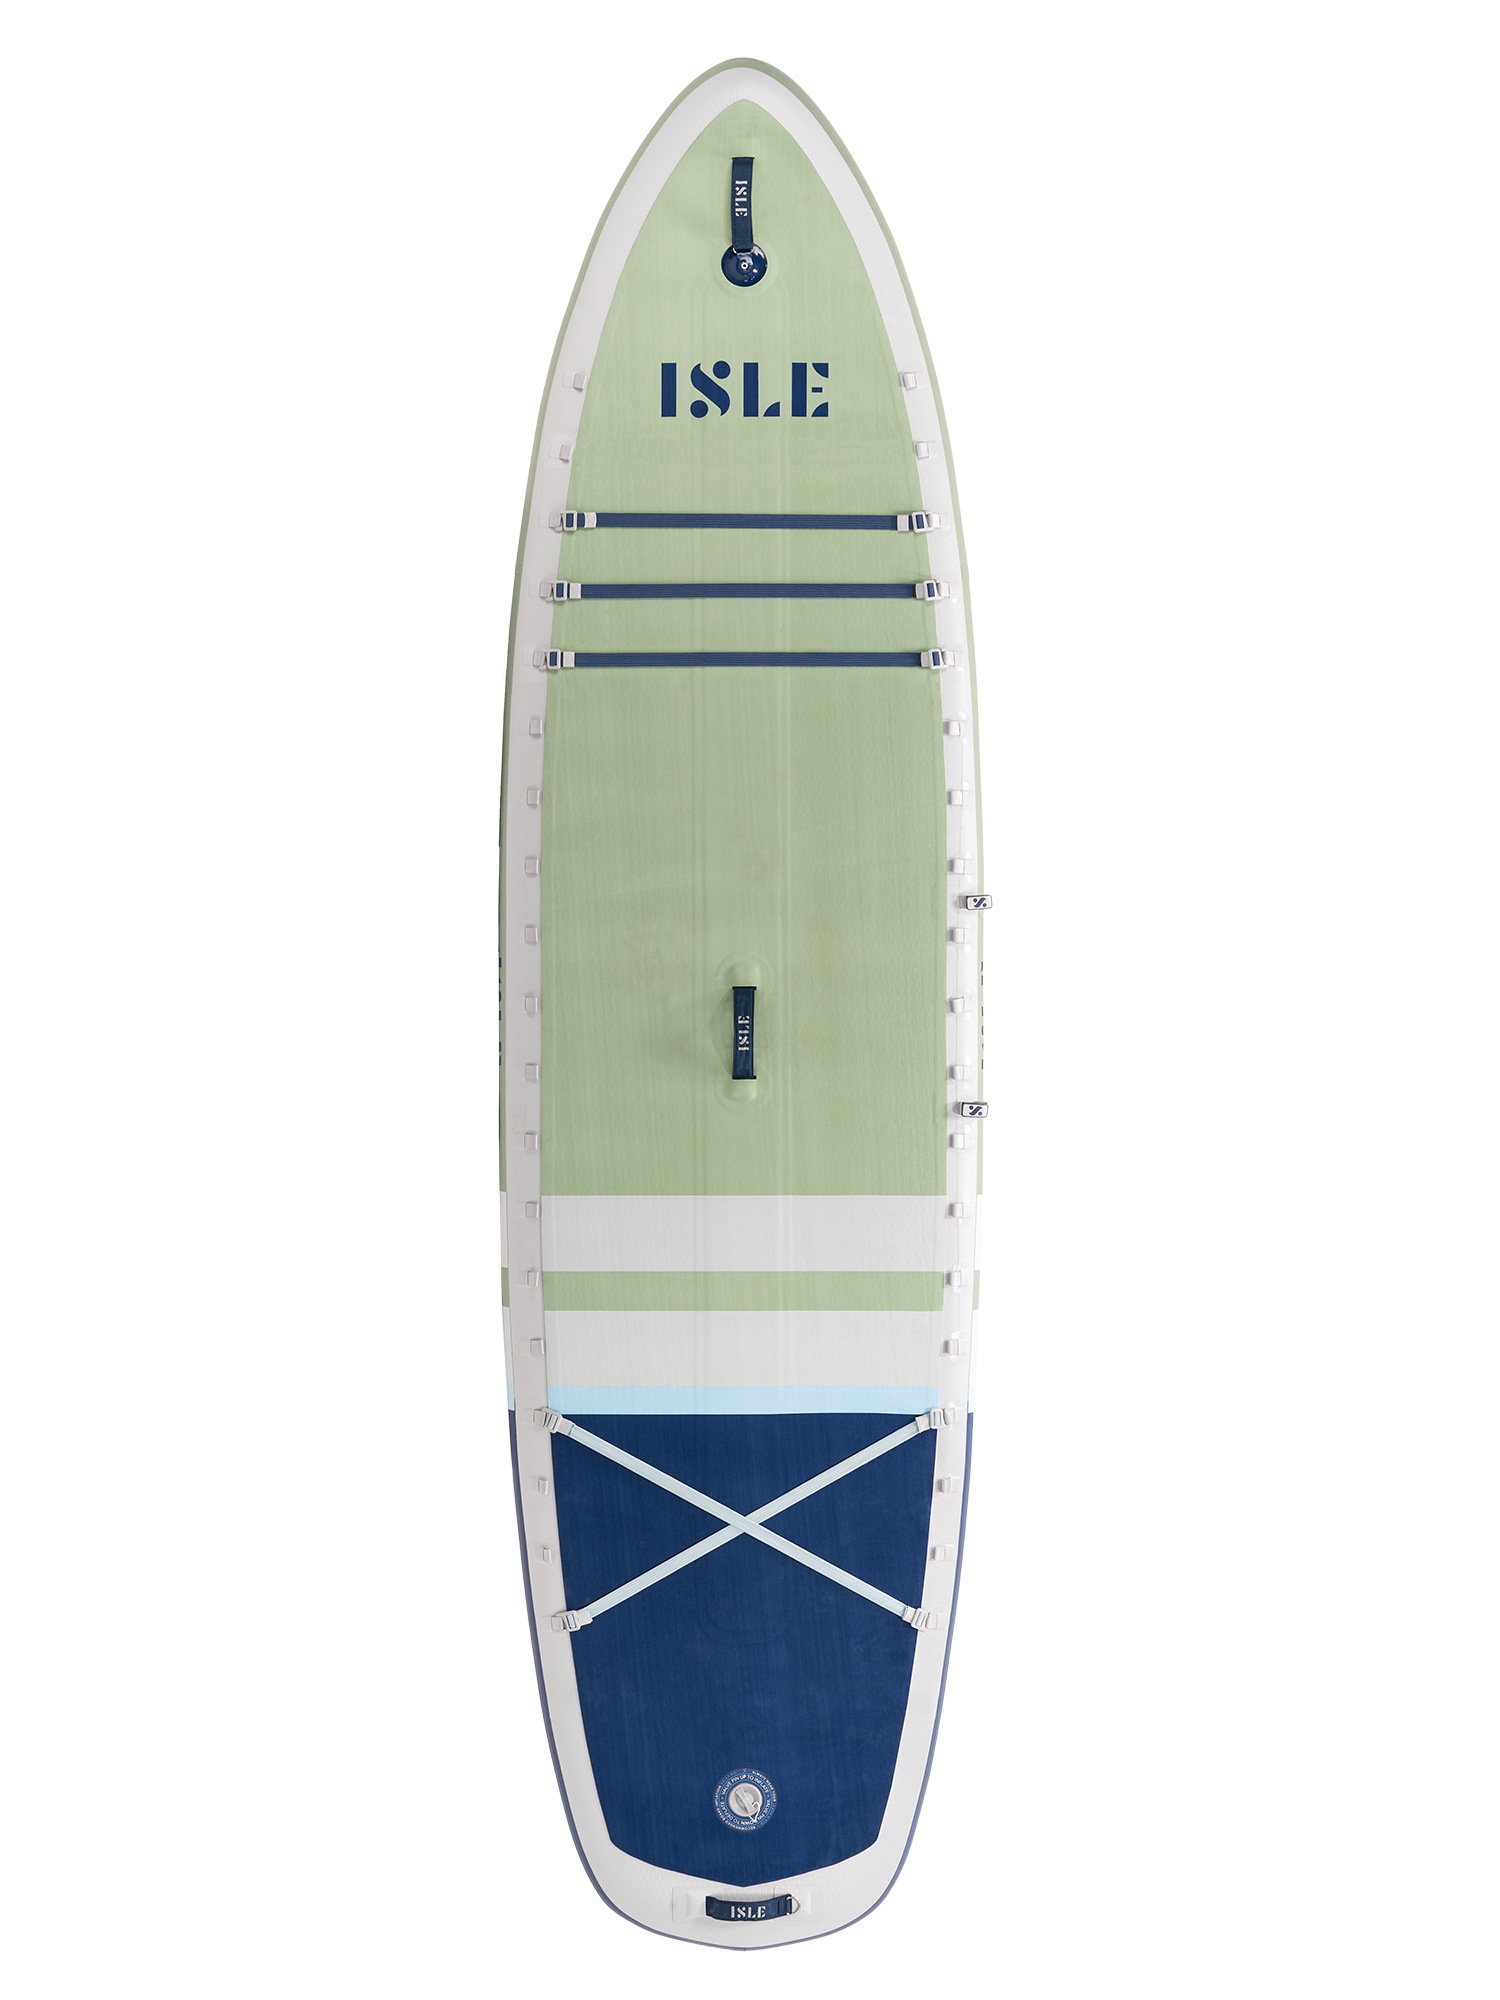 Pioneer Pro Inflatable SUP-Kayak Hybrid Seafoam/Navy/Ice